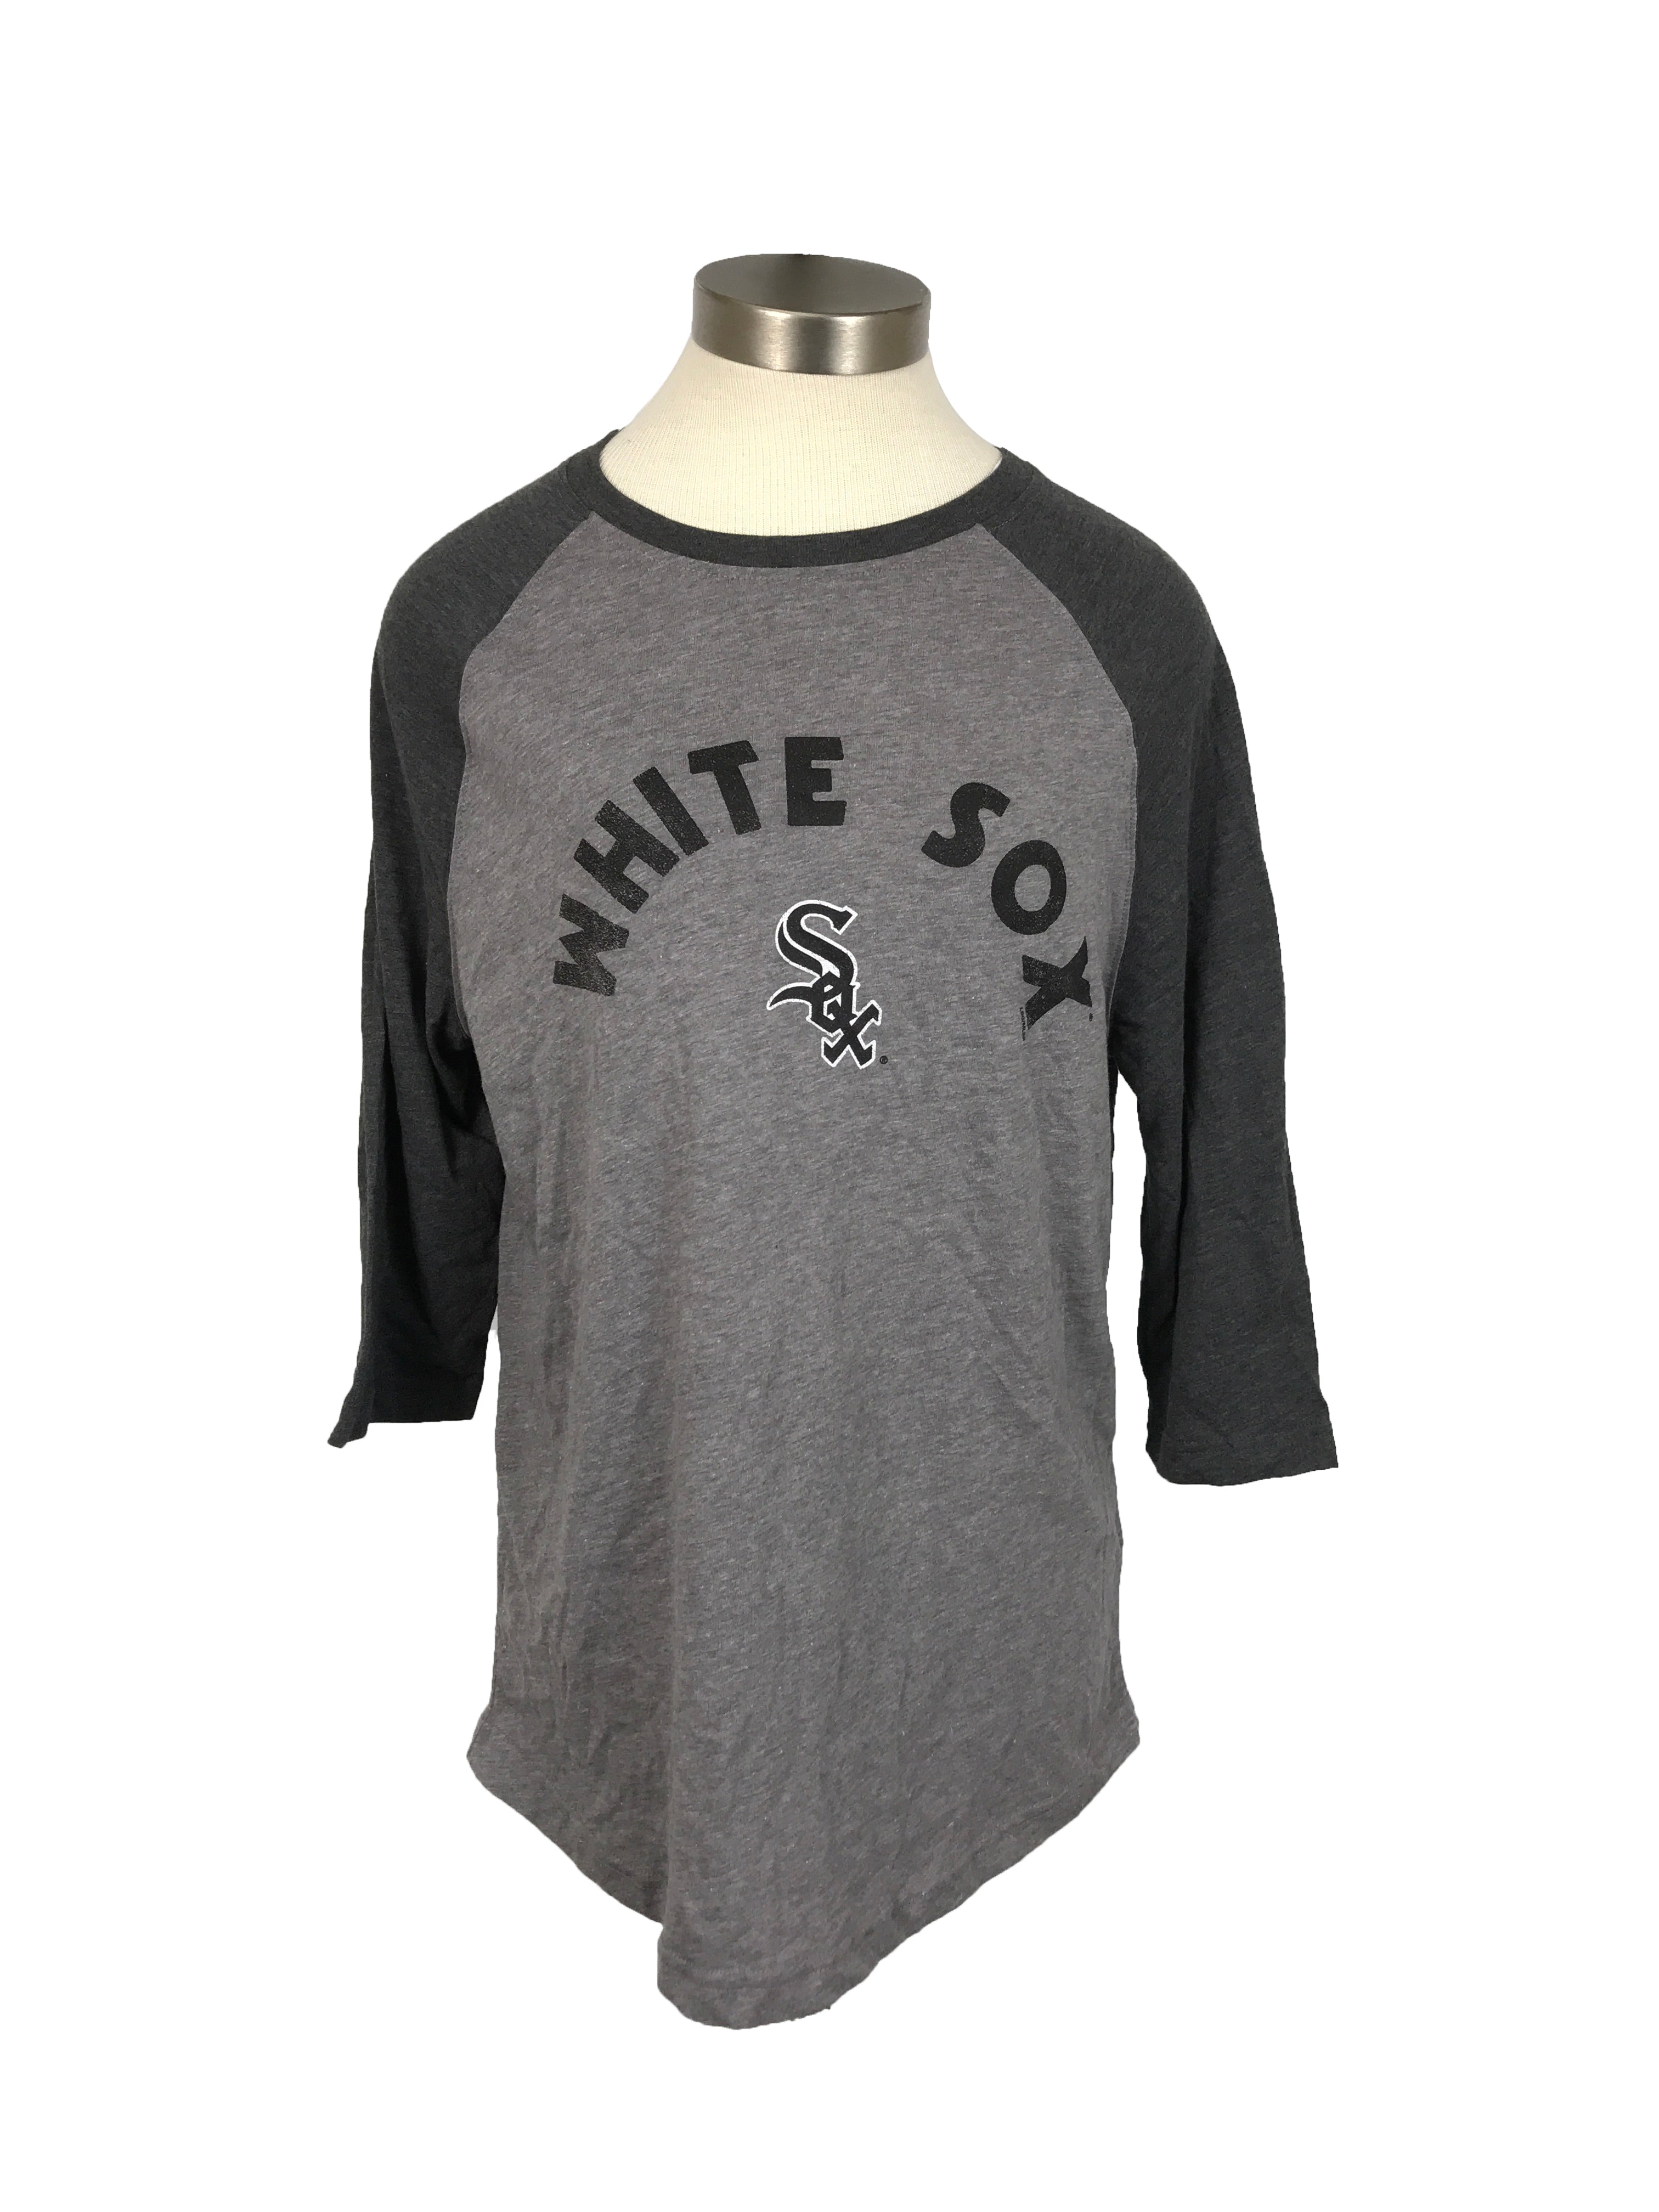 White Sox Gray Baseball T-Shirt Men's Size Medium